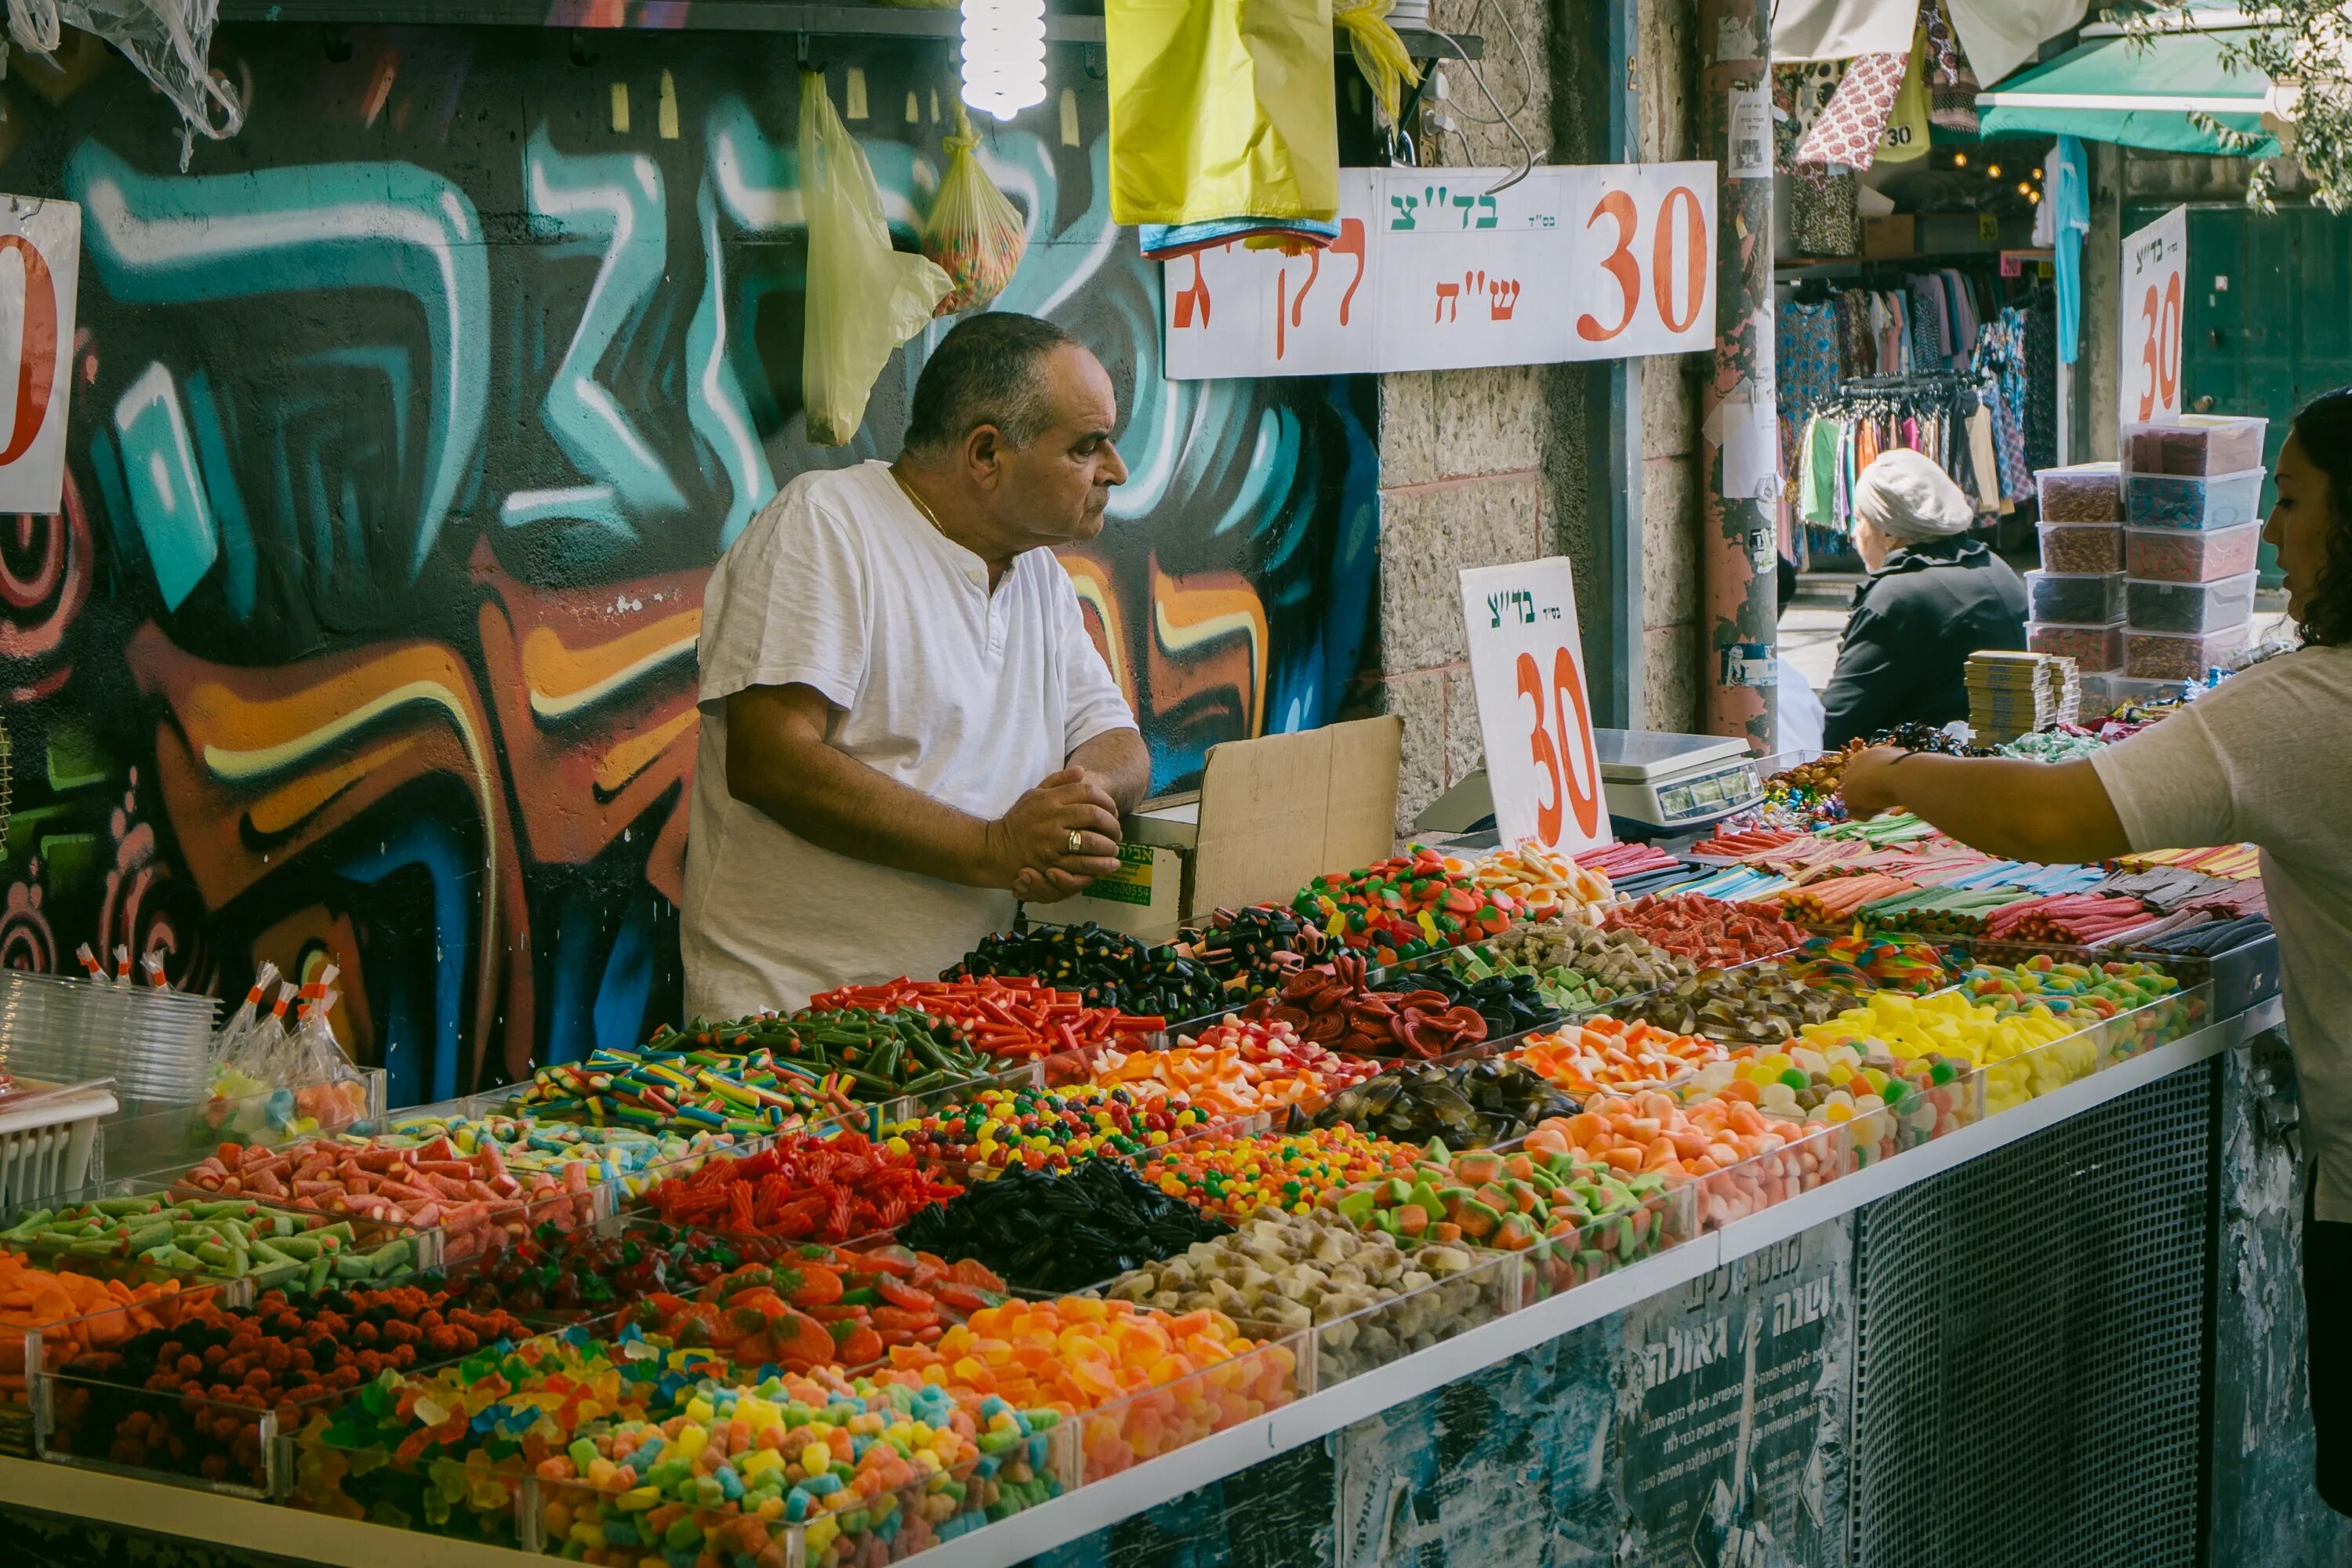 Фон базара. Рынок Махане Иегуда в Иерусалиме. Рынок Махане Иегуда в Иерусалиме люди. Базар (рынок). Базар фото.